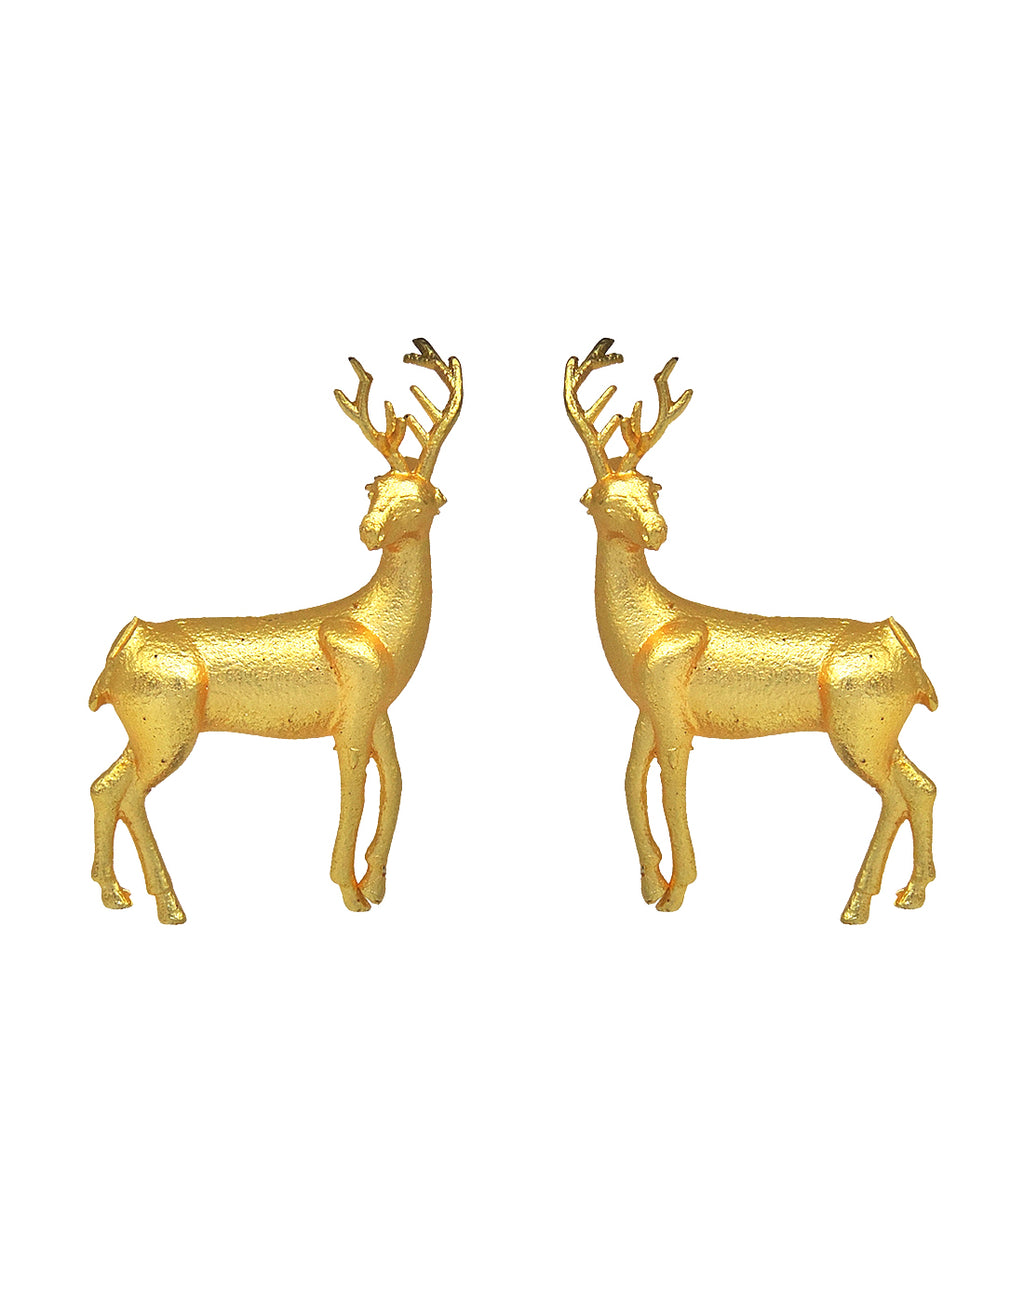 Deer Earrings - Statement Earrings - Gold-Plated & Hypoallergenic - Made in India - Dubai Jewellery - Dori